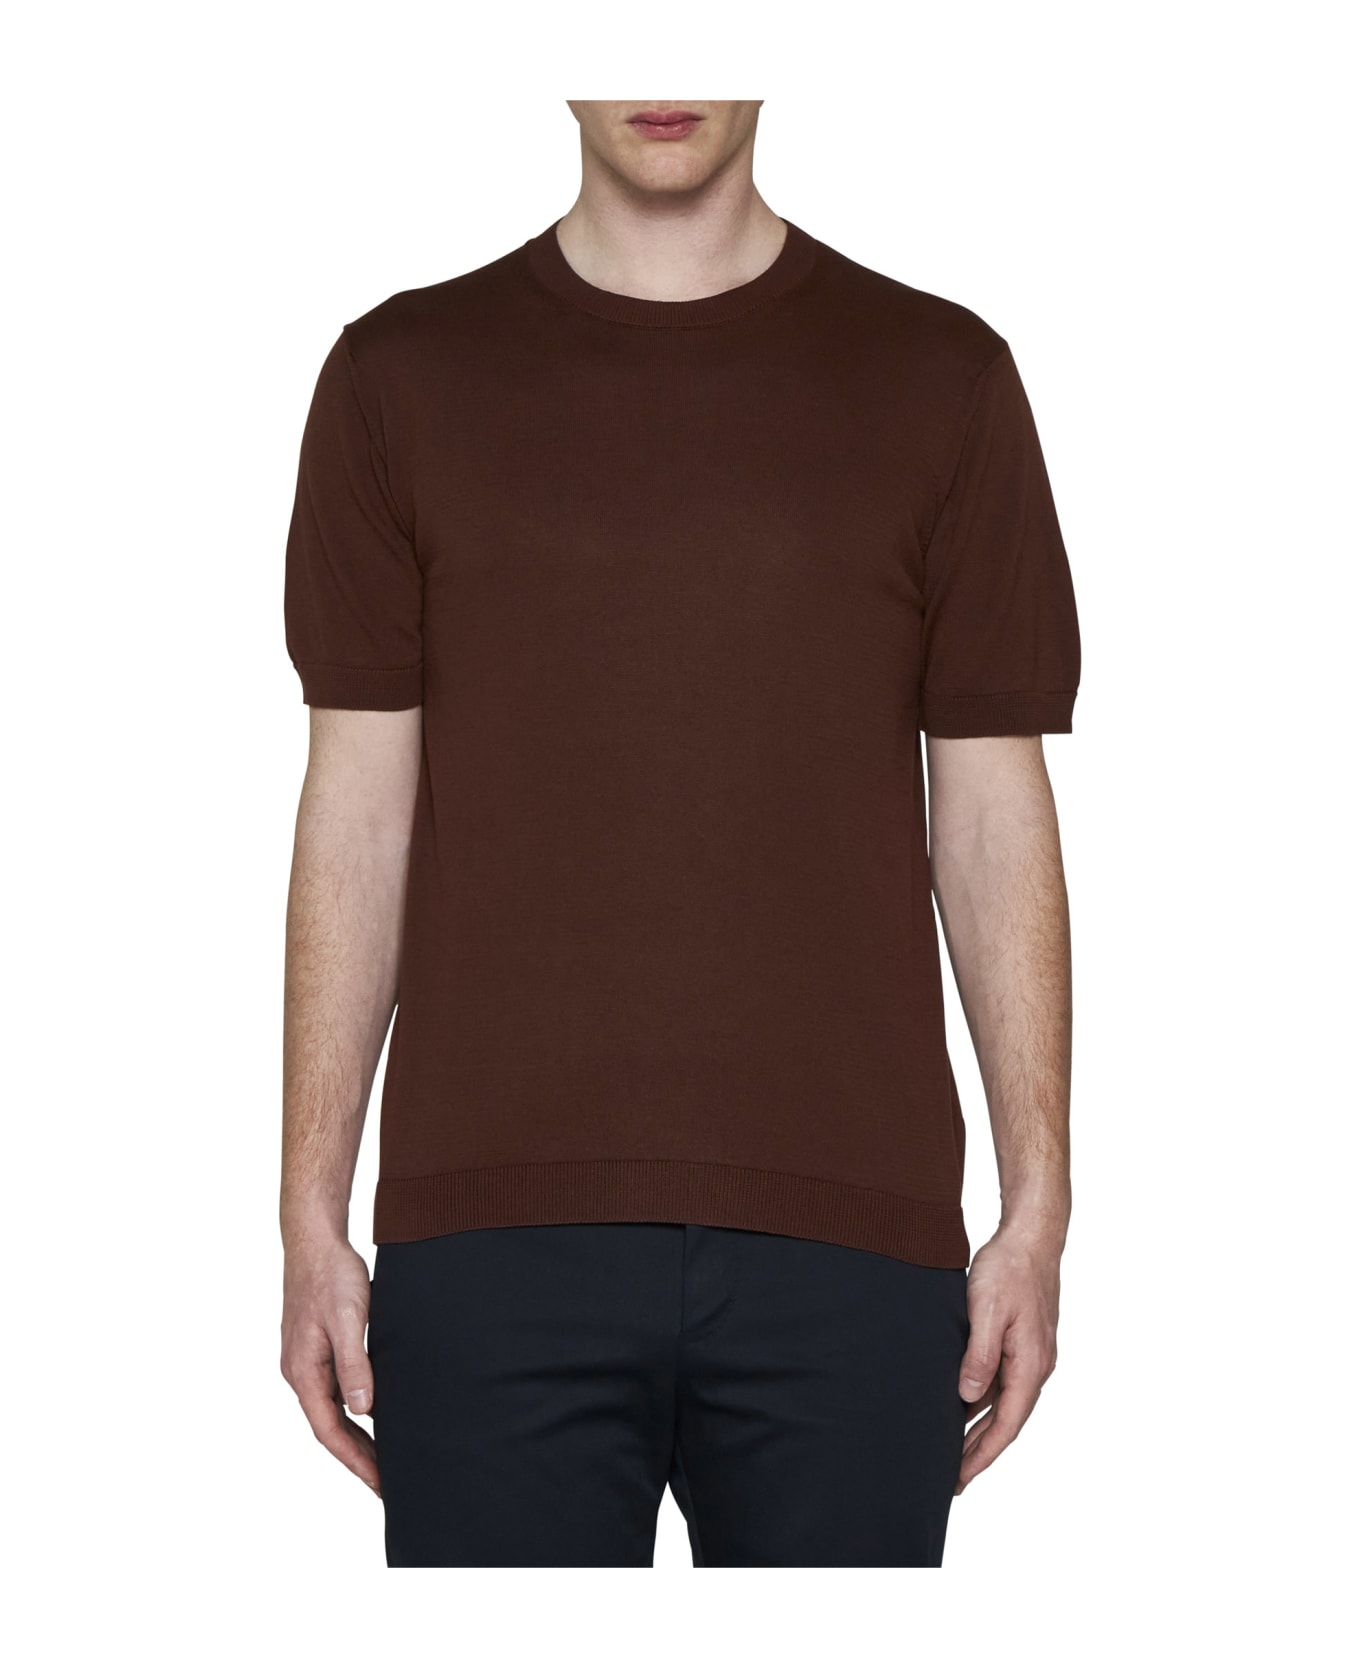 Tagliatore T-shirt - Brown